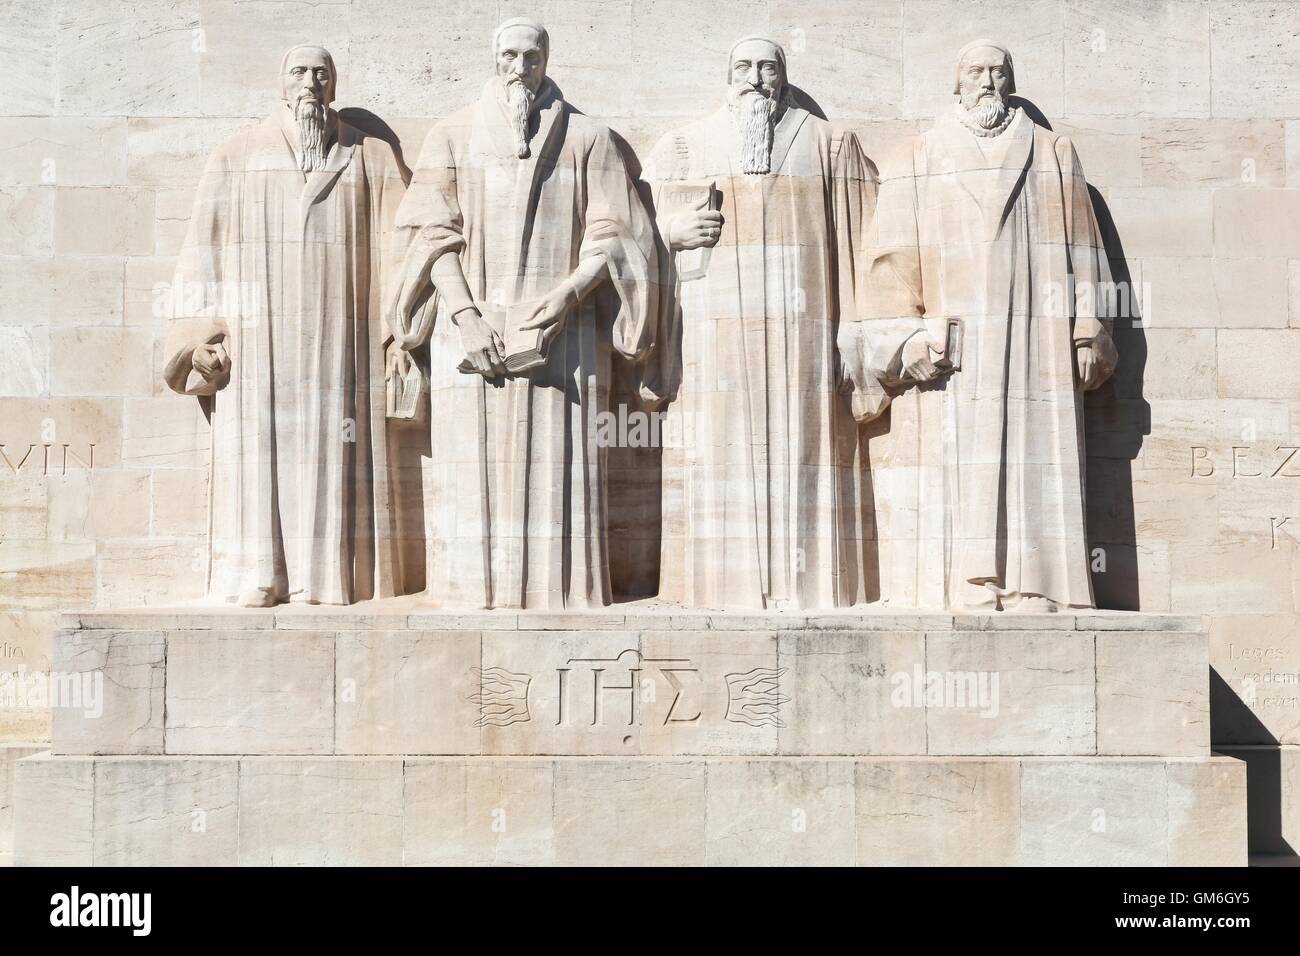 Reformation wall in Geneva, Switzerland Stock Photo